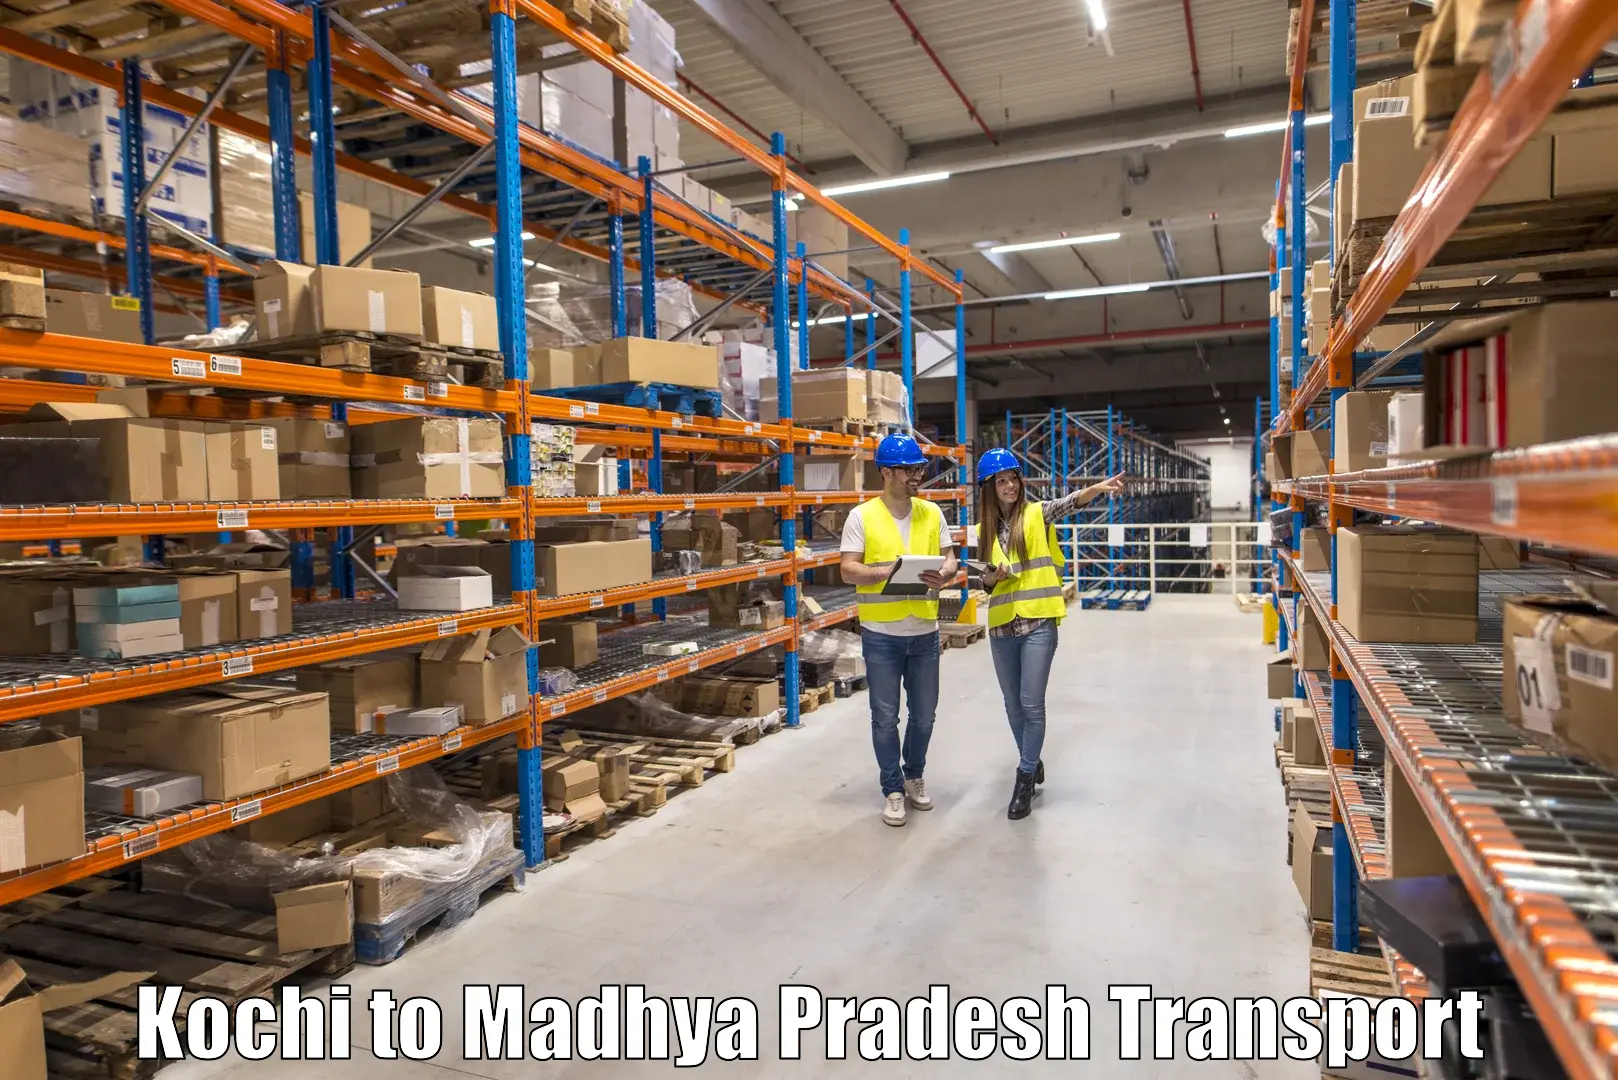 Part load transport service in India Kochi to Bichhiya